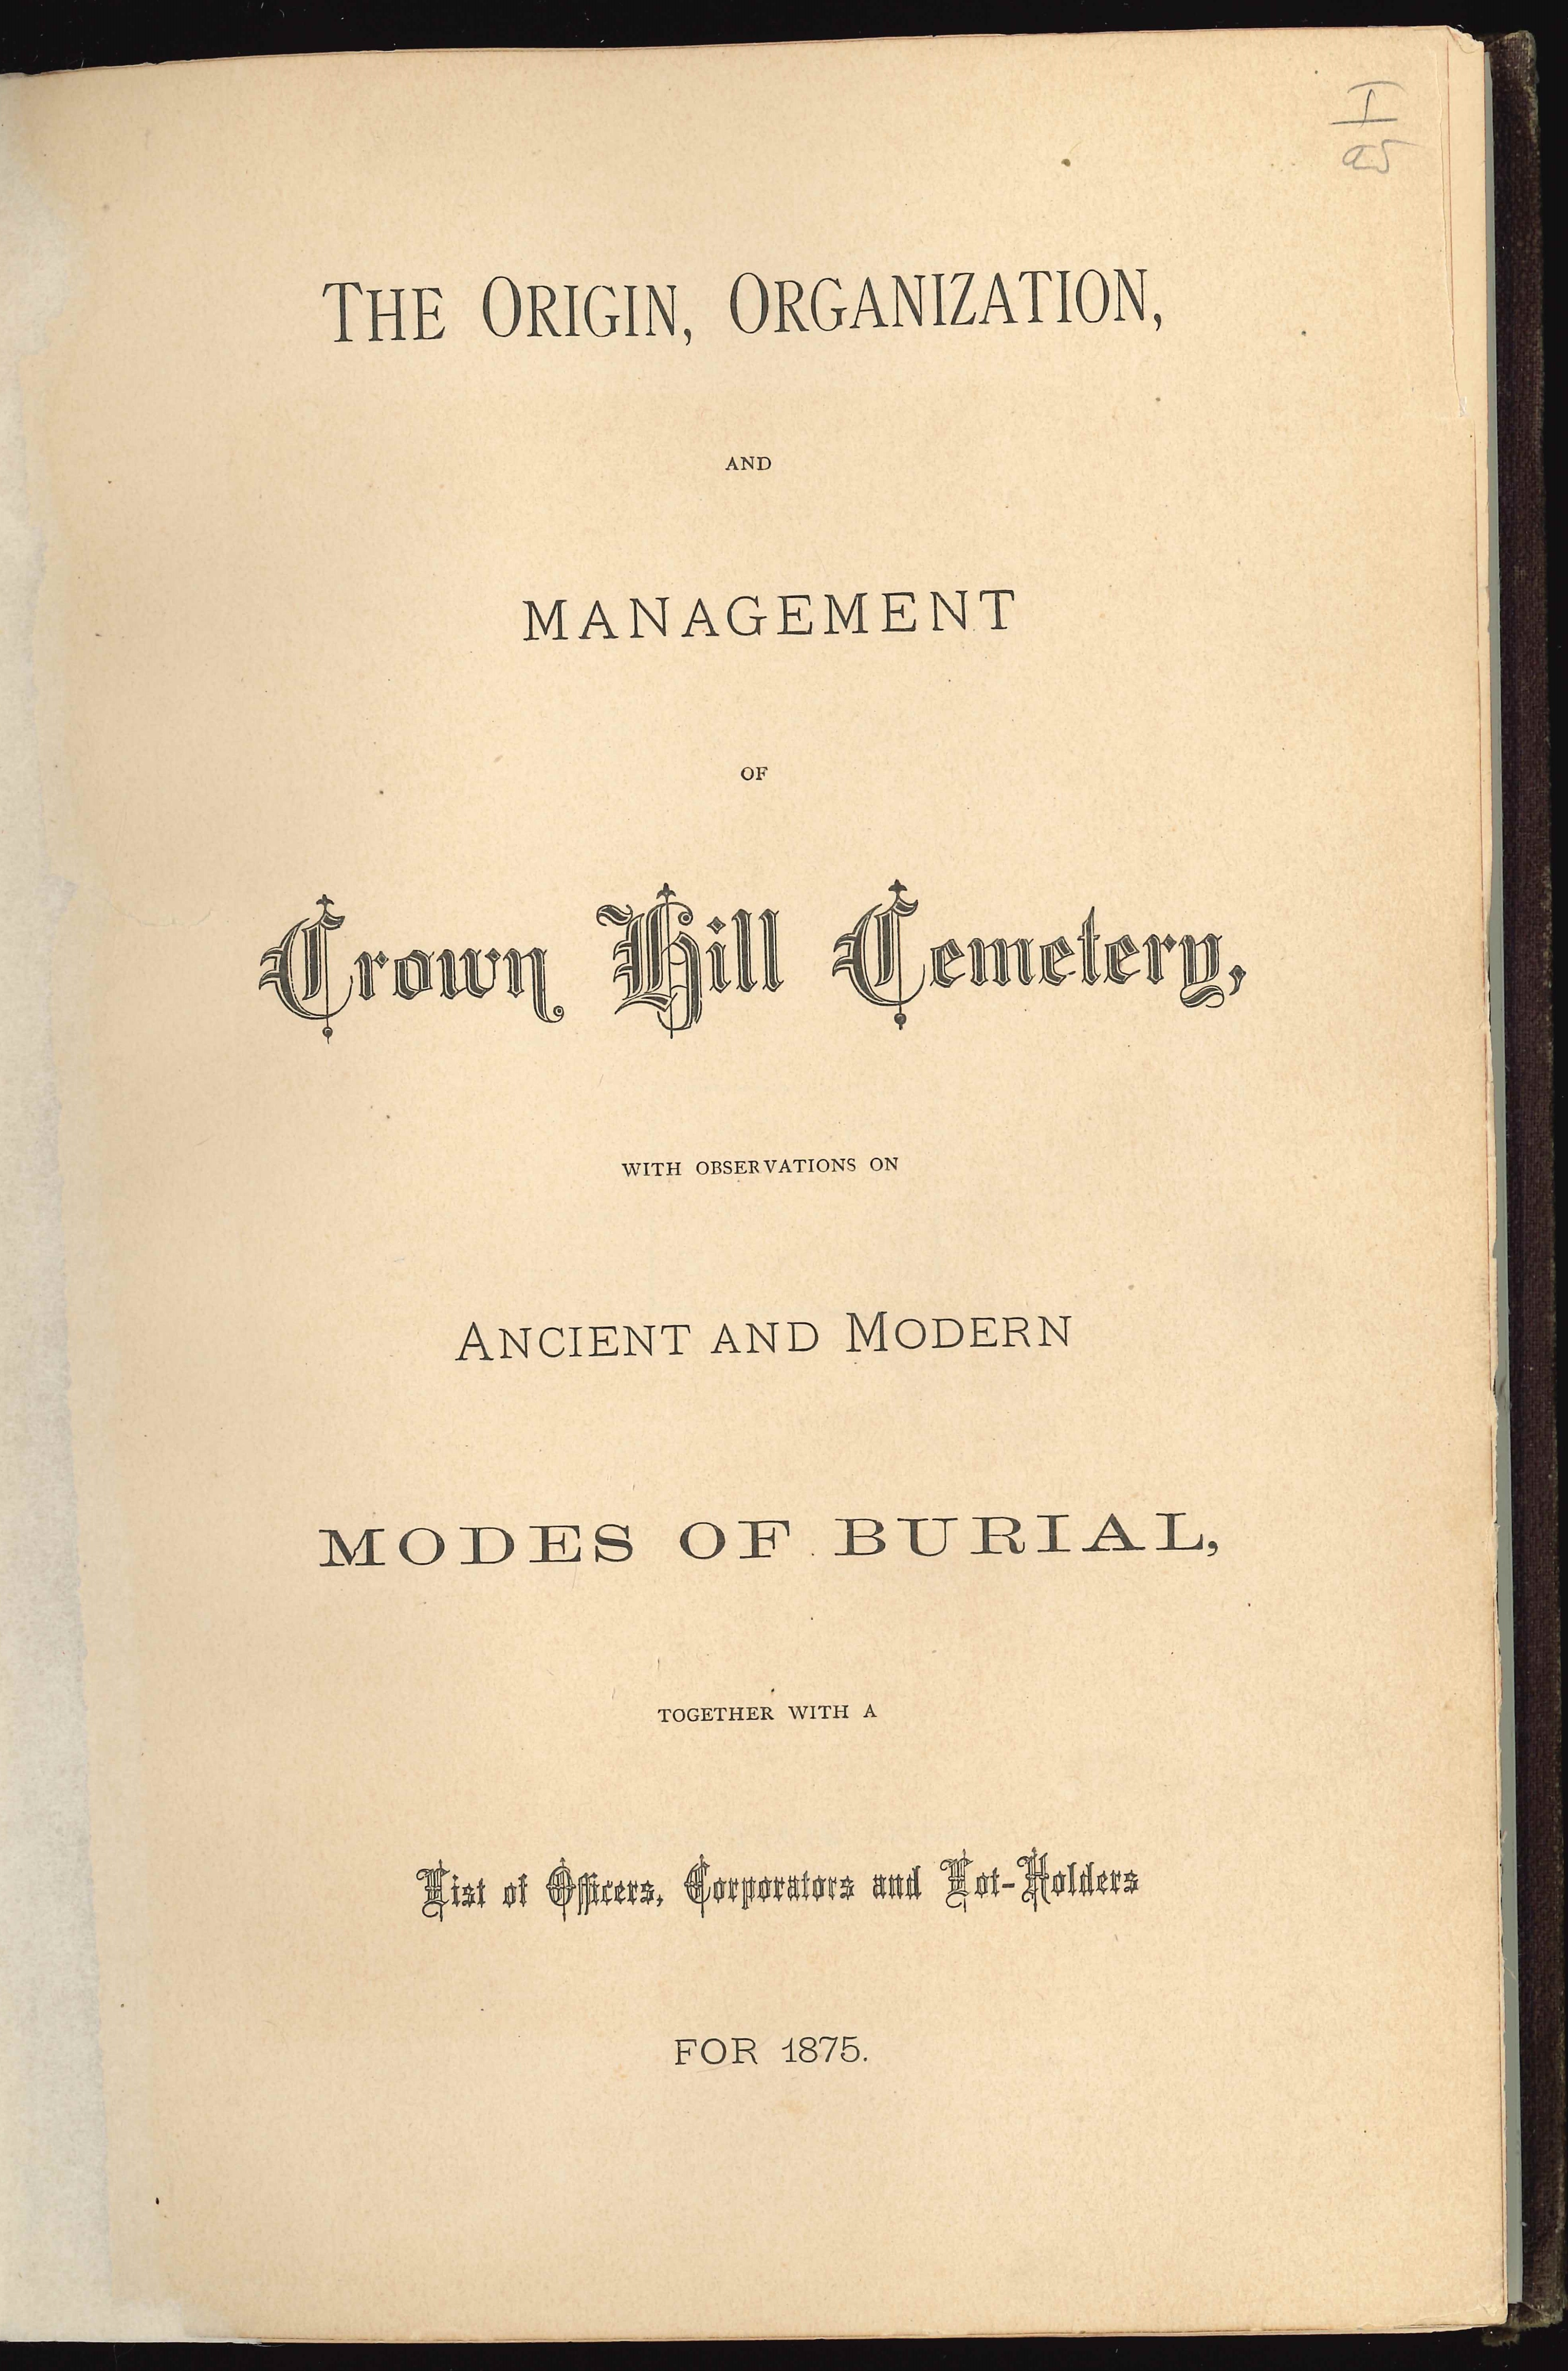 1875 edition title